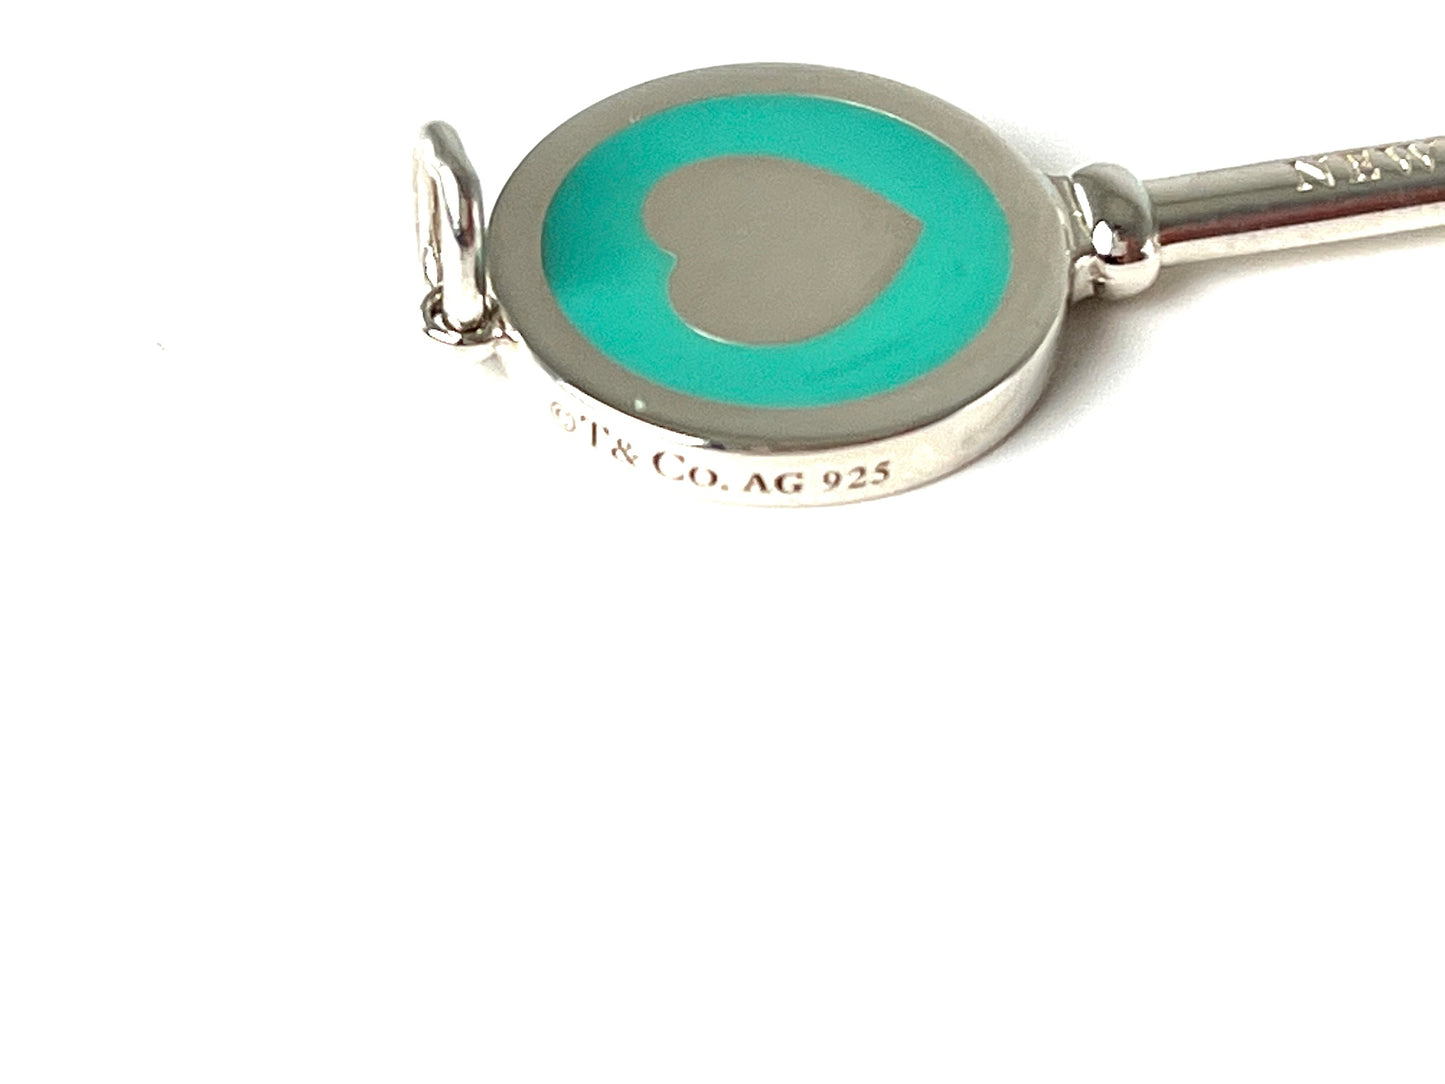 Tiffany & Co Key Enamel Blue Heart Sterling Silver Tag Charm Pendant